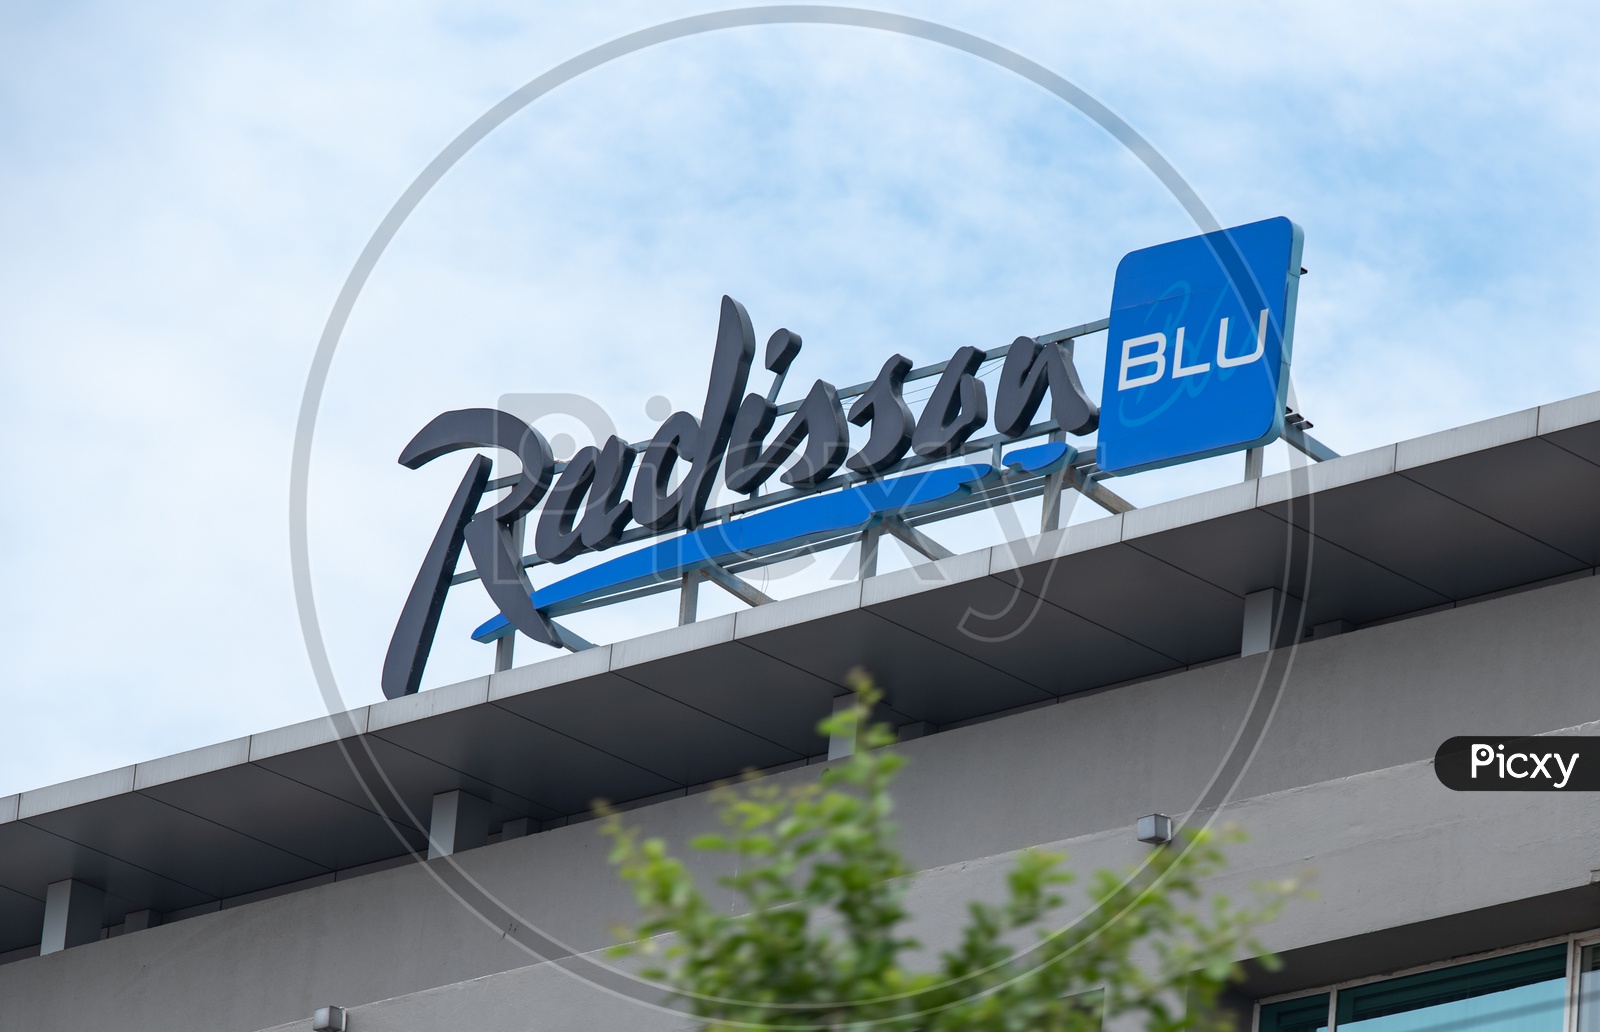 Radisson BLU a luxury group of hotels